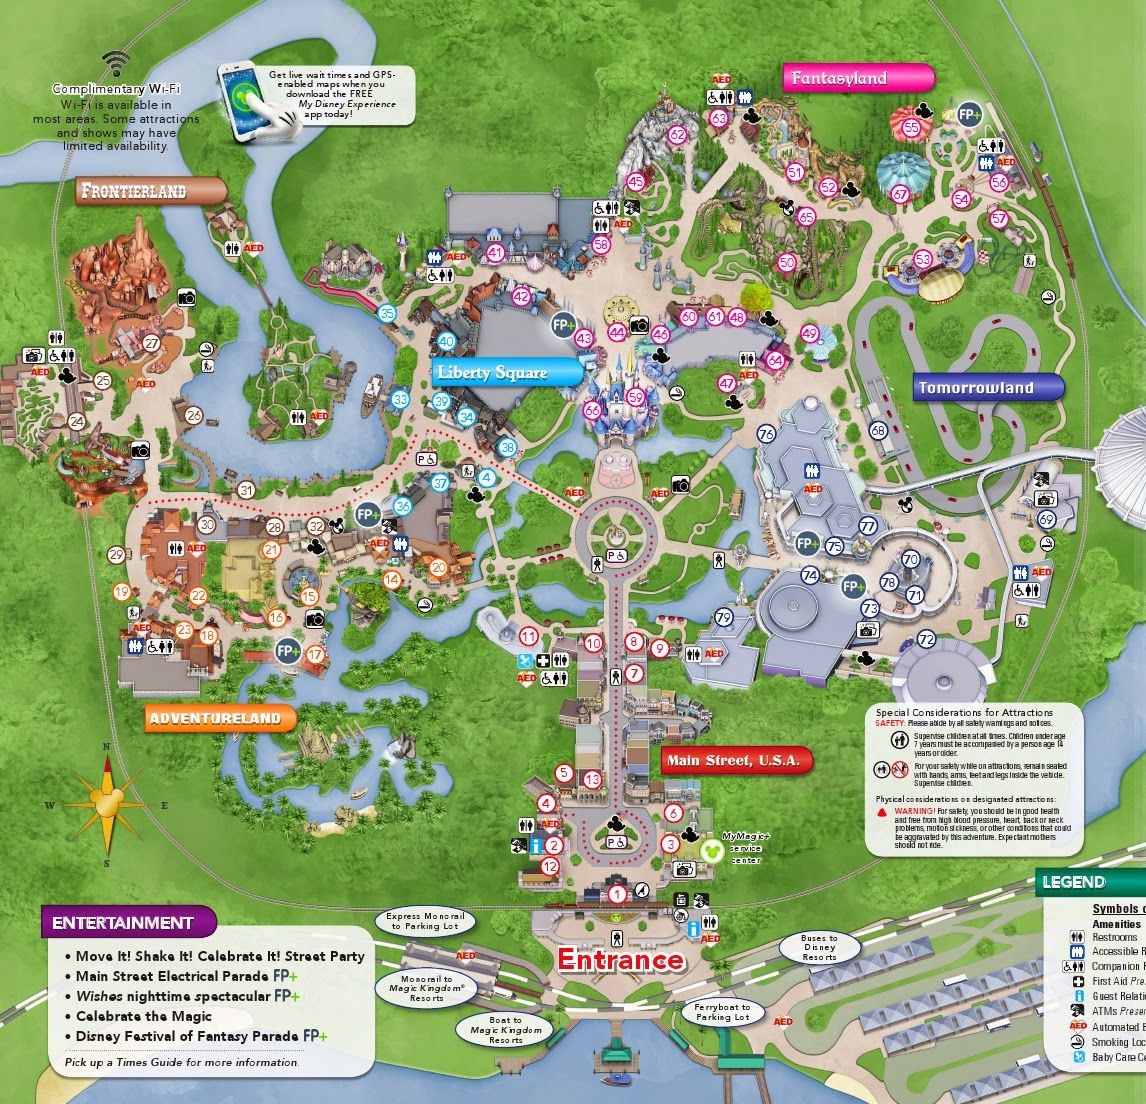 Seven Dwarfs Mine Train Poster With Images Disney World Map Disney 